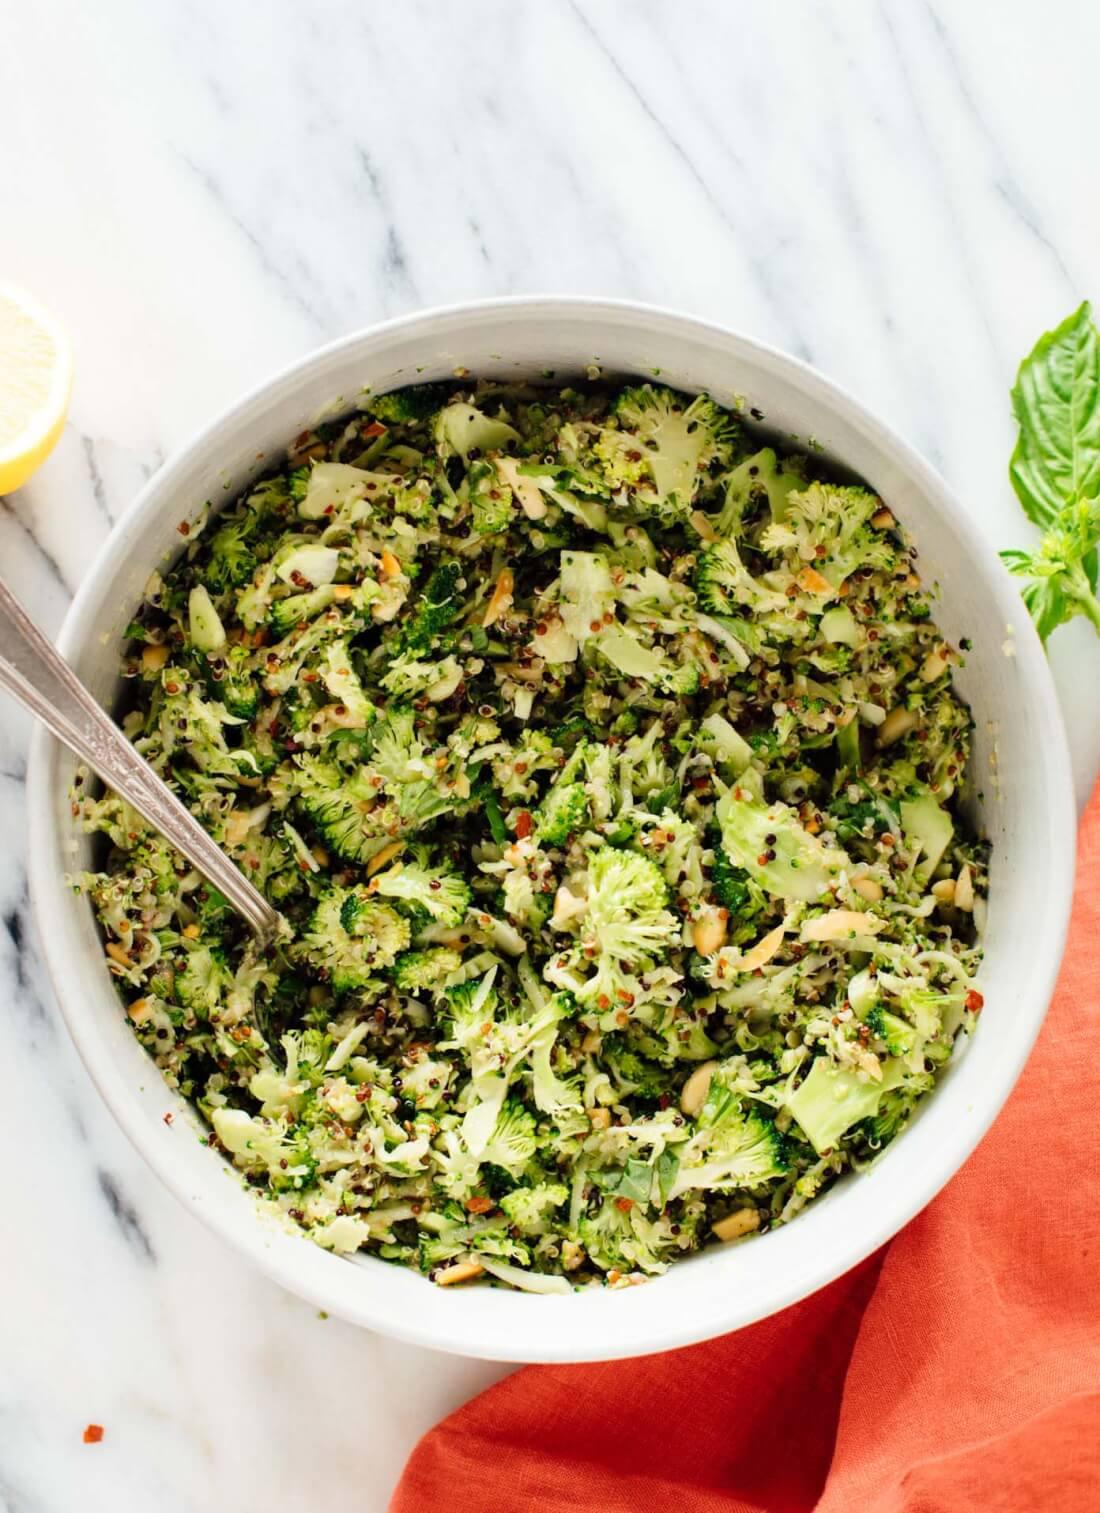 This mayo-free quinoa broccoli slaw recipe is a fun twist on an old classic! It